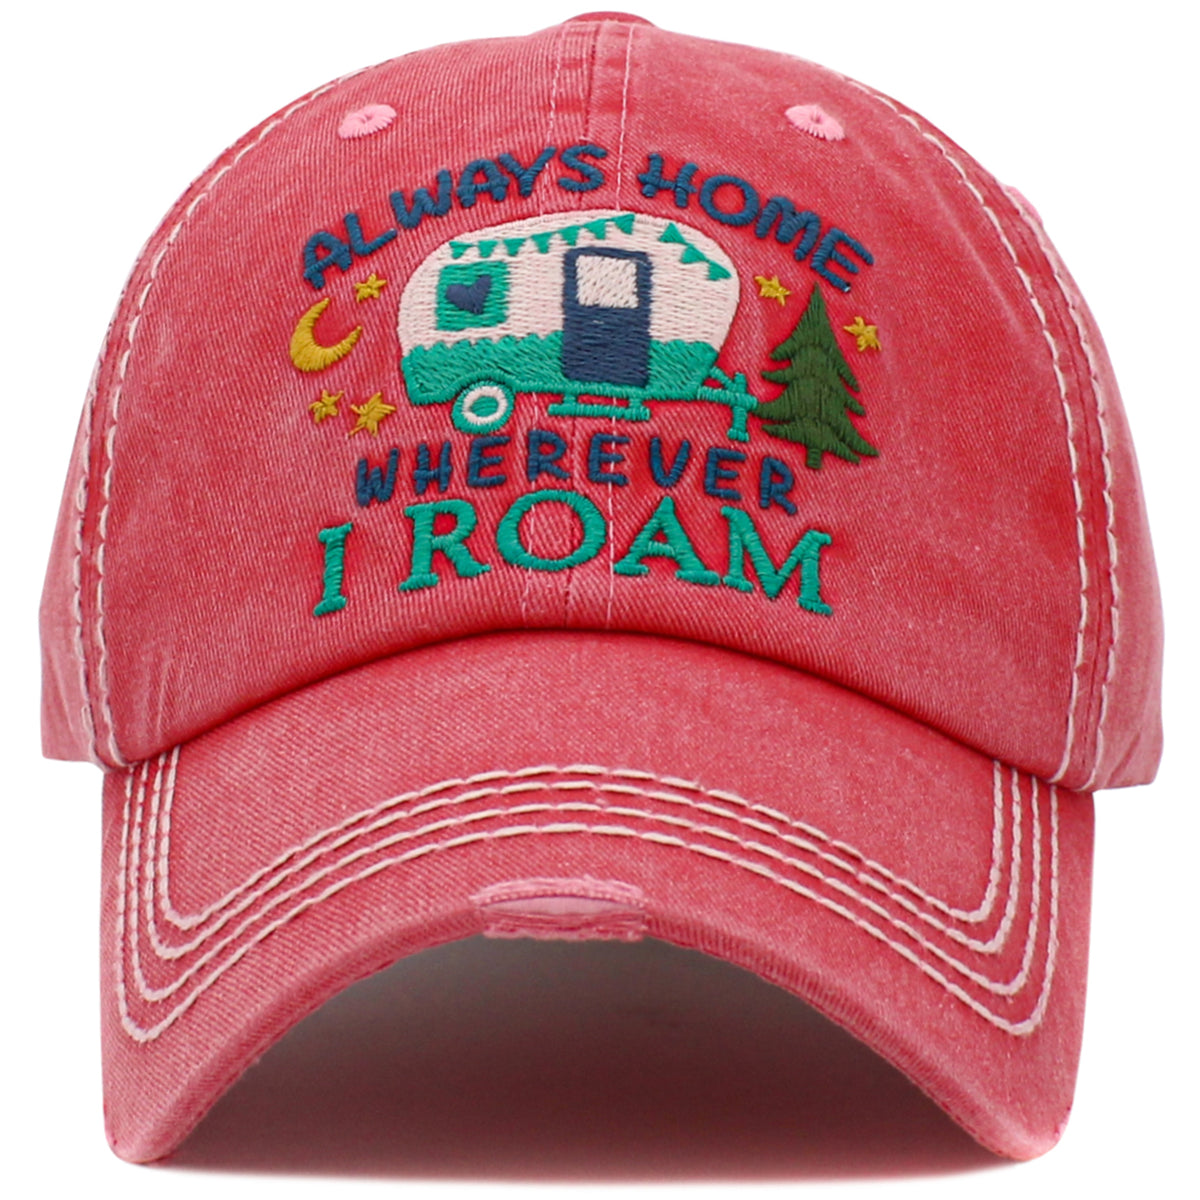 1510 - Always Home Wherever I Roam Hat - Hot Pink